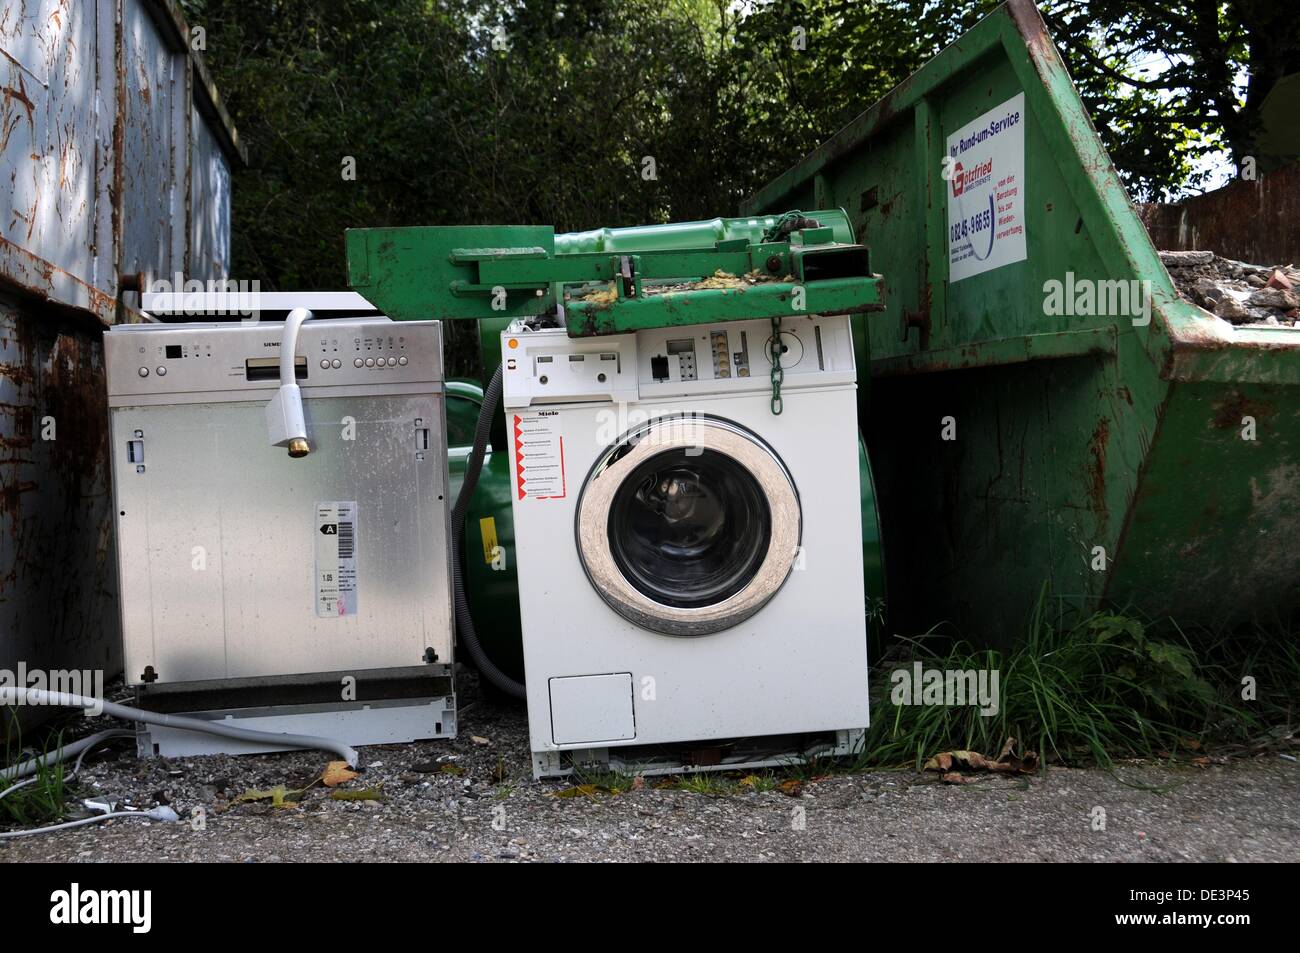 Washing machine recycling fotografías e imágenes de alta resolución - Alamy